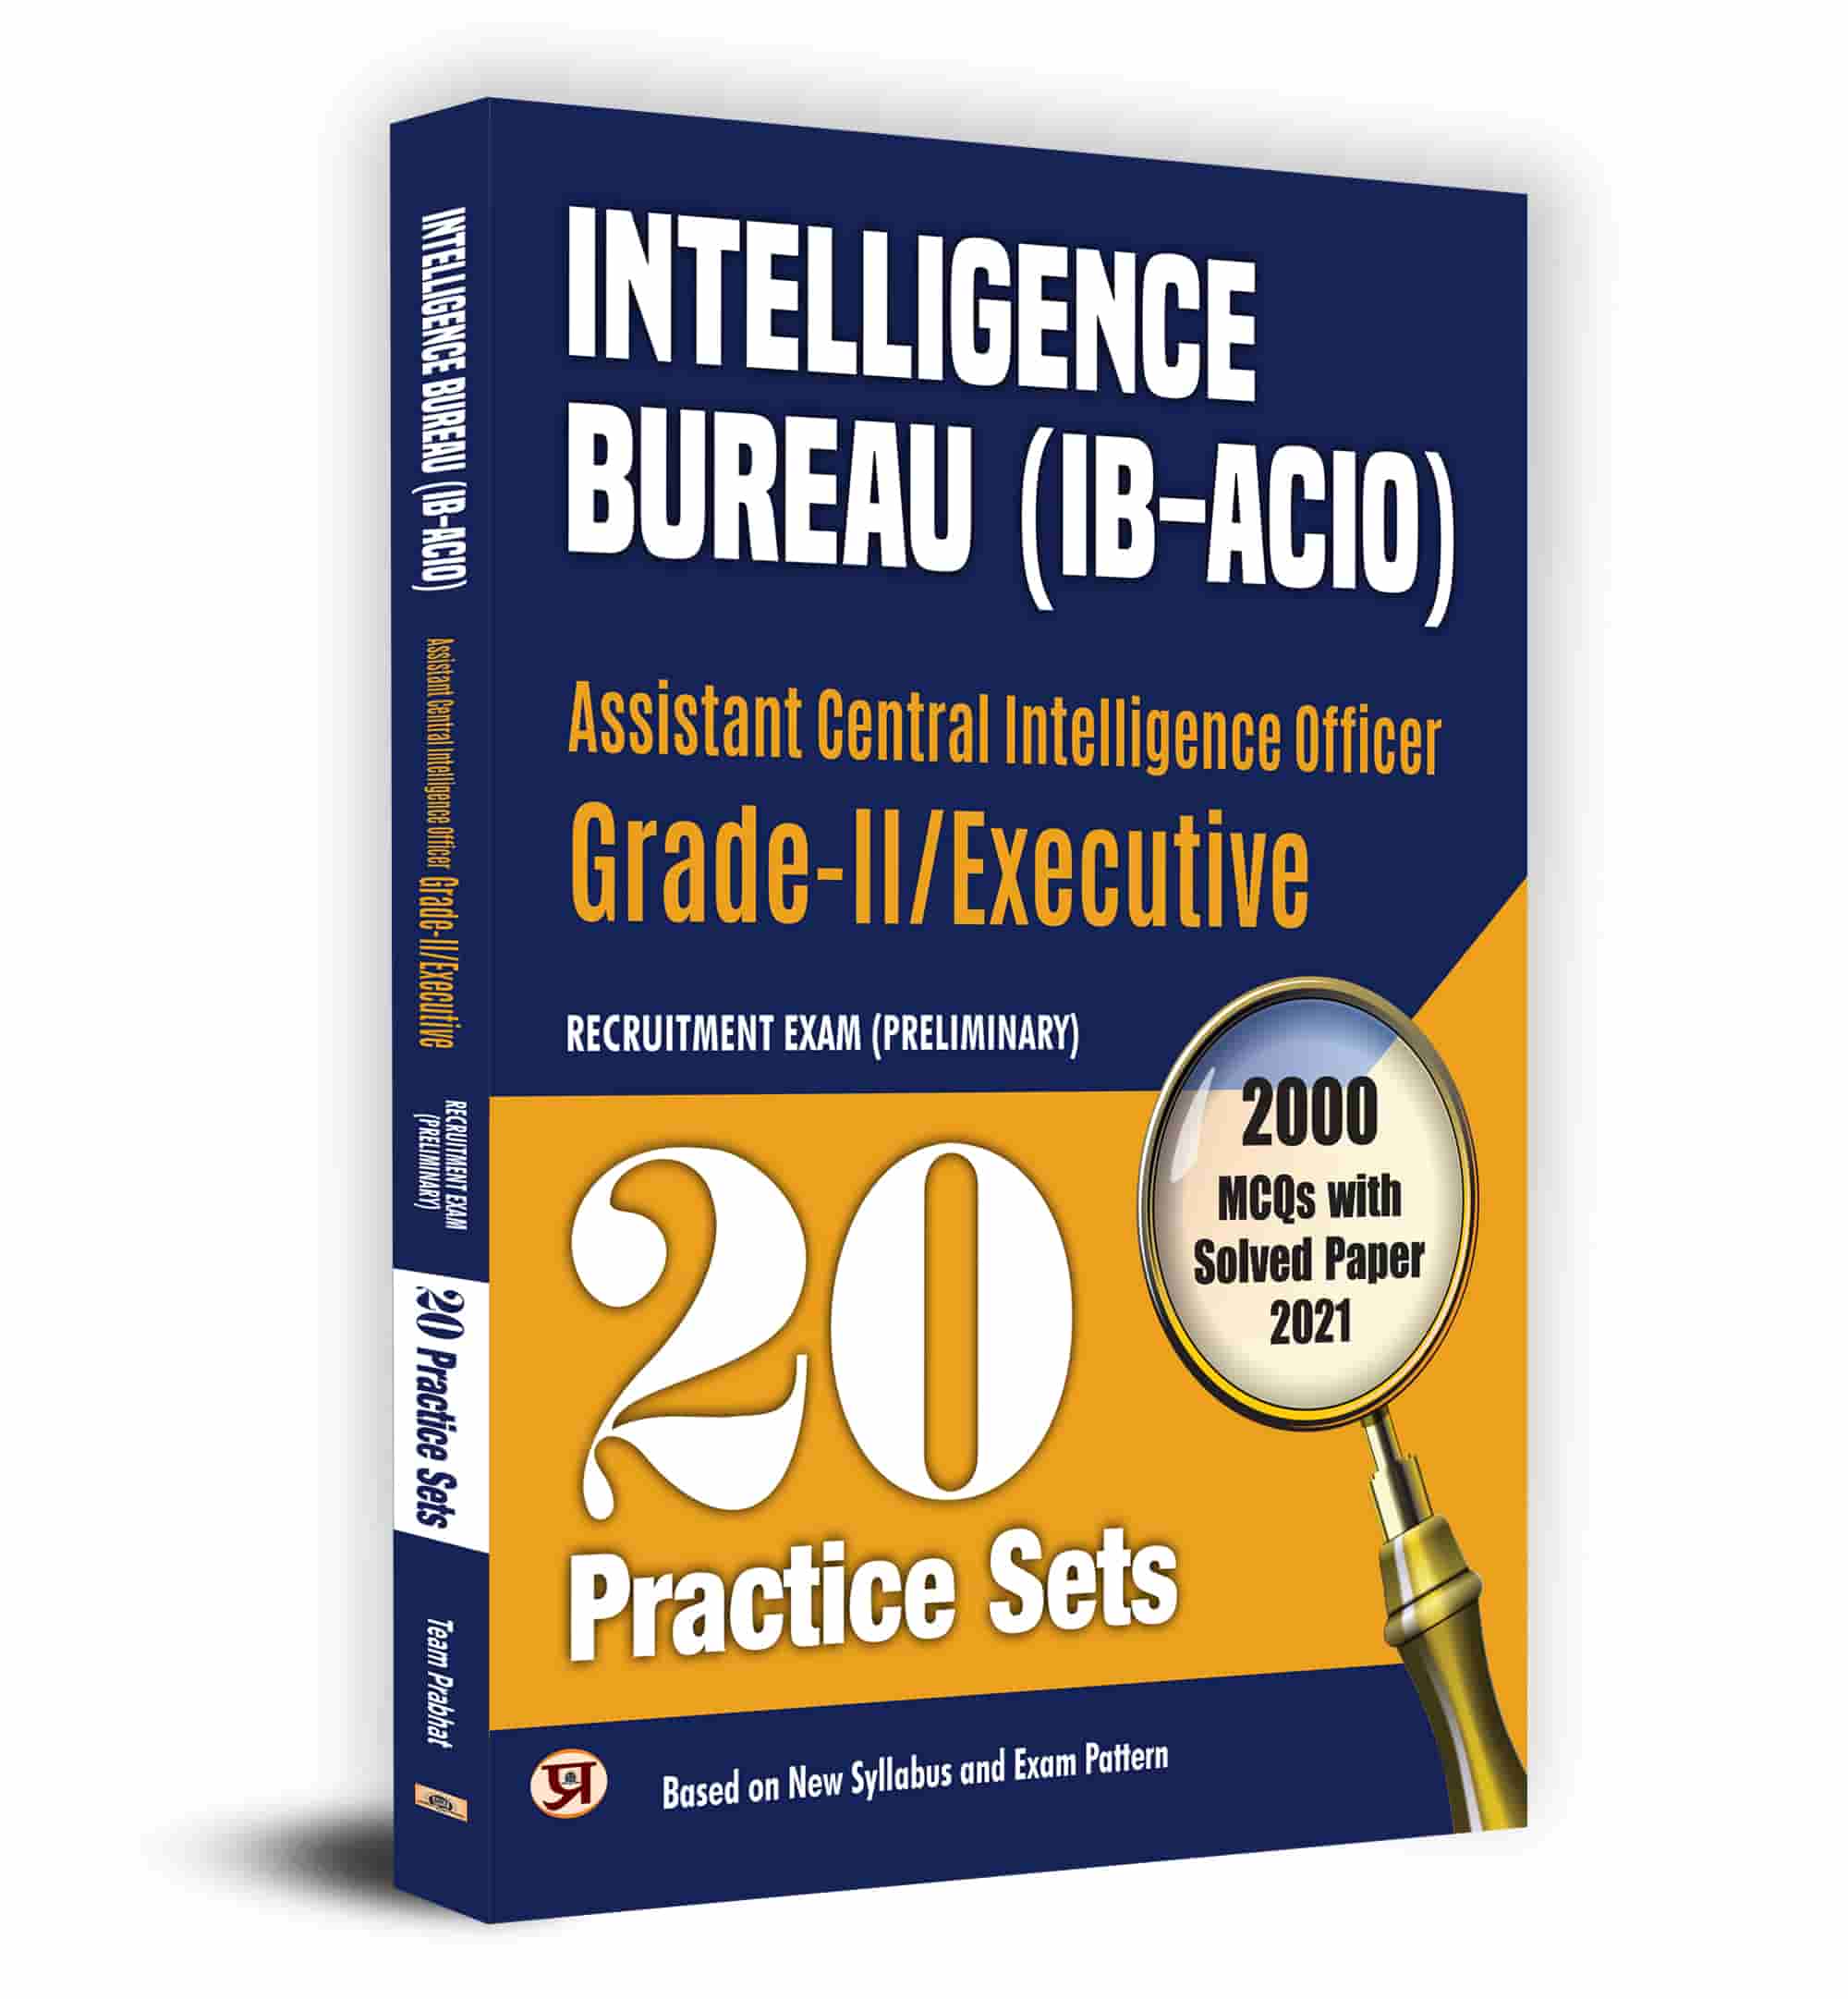 Intelligence Bureau (IB-ACIO) Assistant Central Intelligence Officer Grade II/Executive Primary Recruitment Examination 20 Practice Sets Book